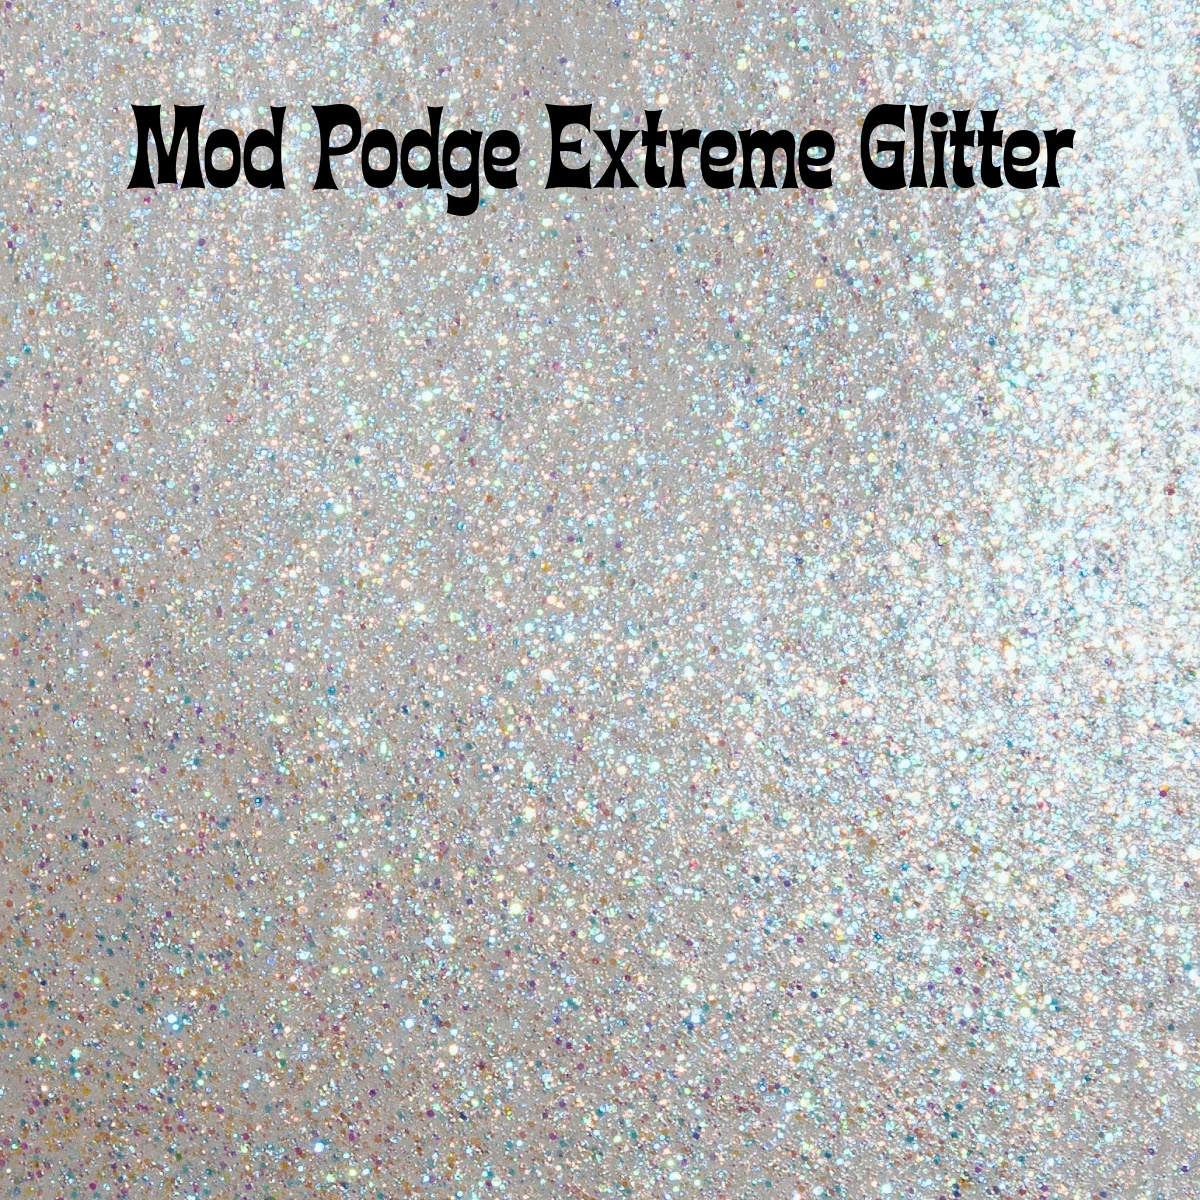 Mod Podge Extreme Glitter: Your Complete Guide! - Mod Podge Rocks